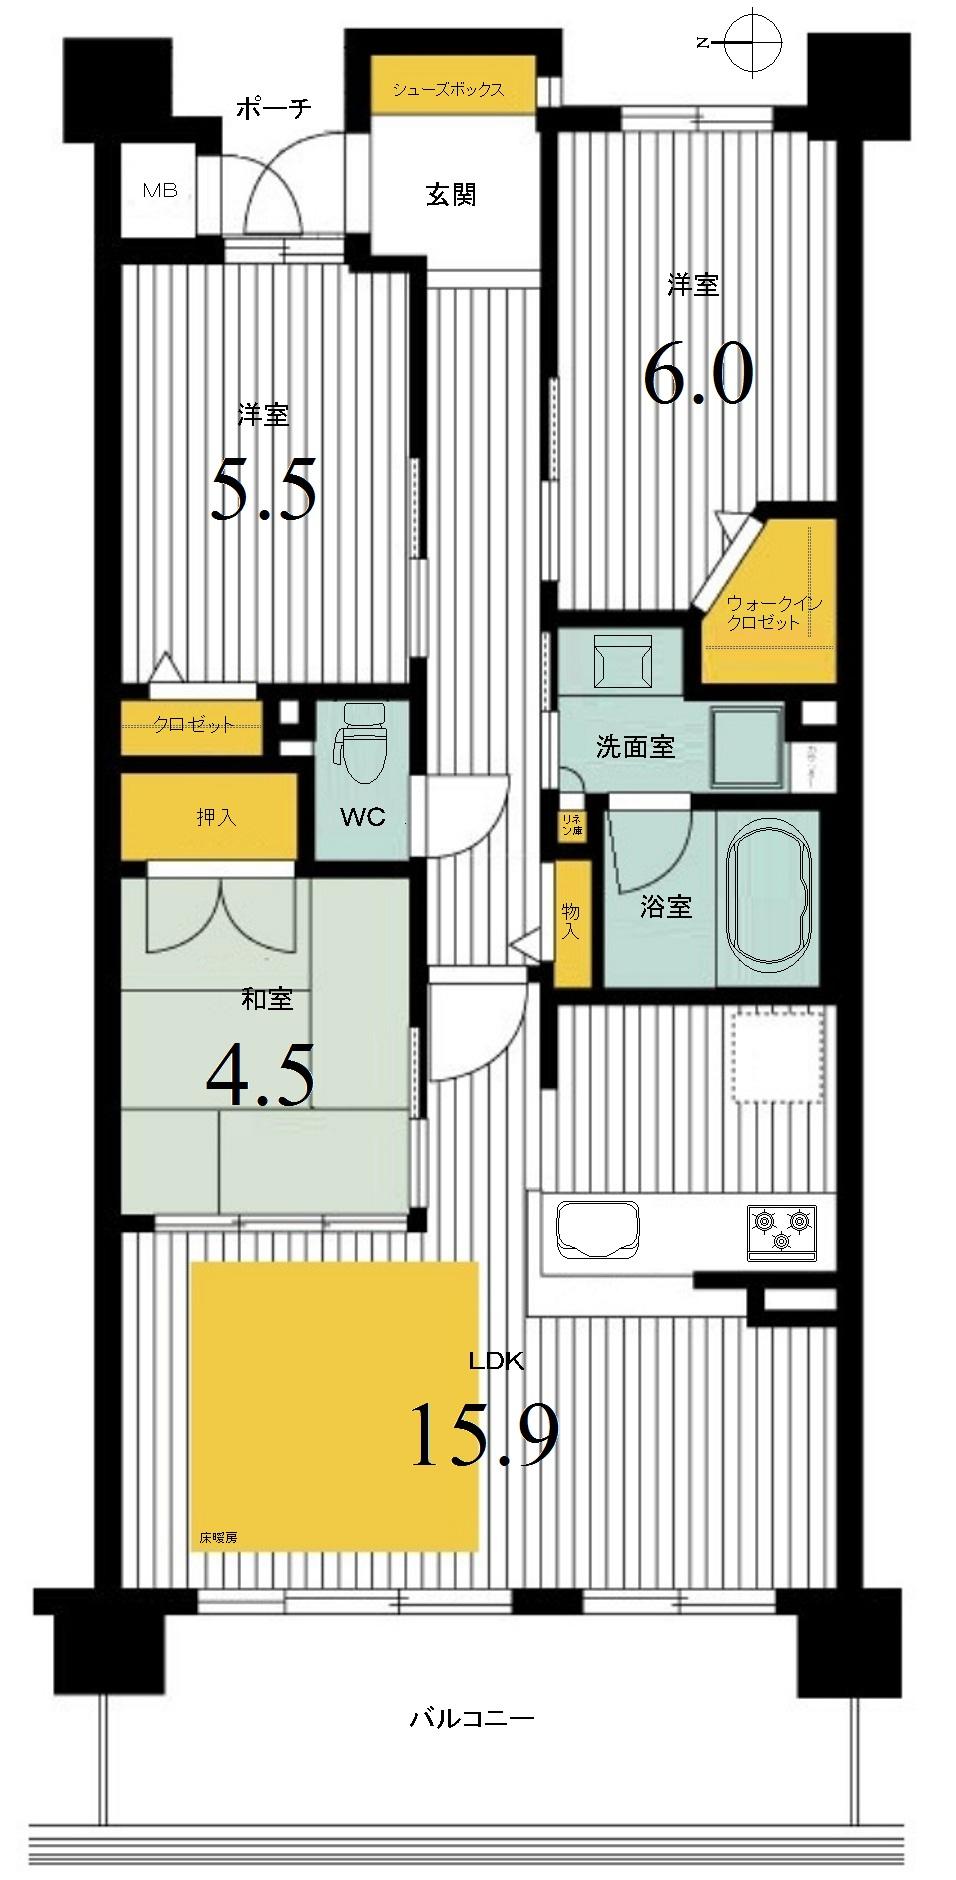 Floor plan. 3LDK, Price 27 million yen, Occupied area 73.09 sq m , Balcony area 11.59 sq m floor plan